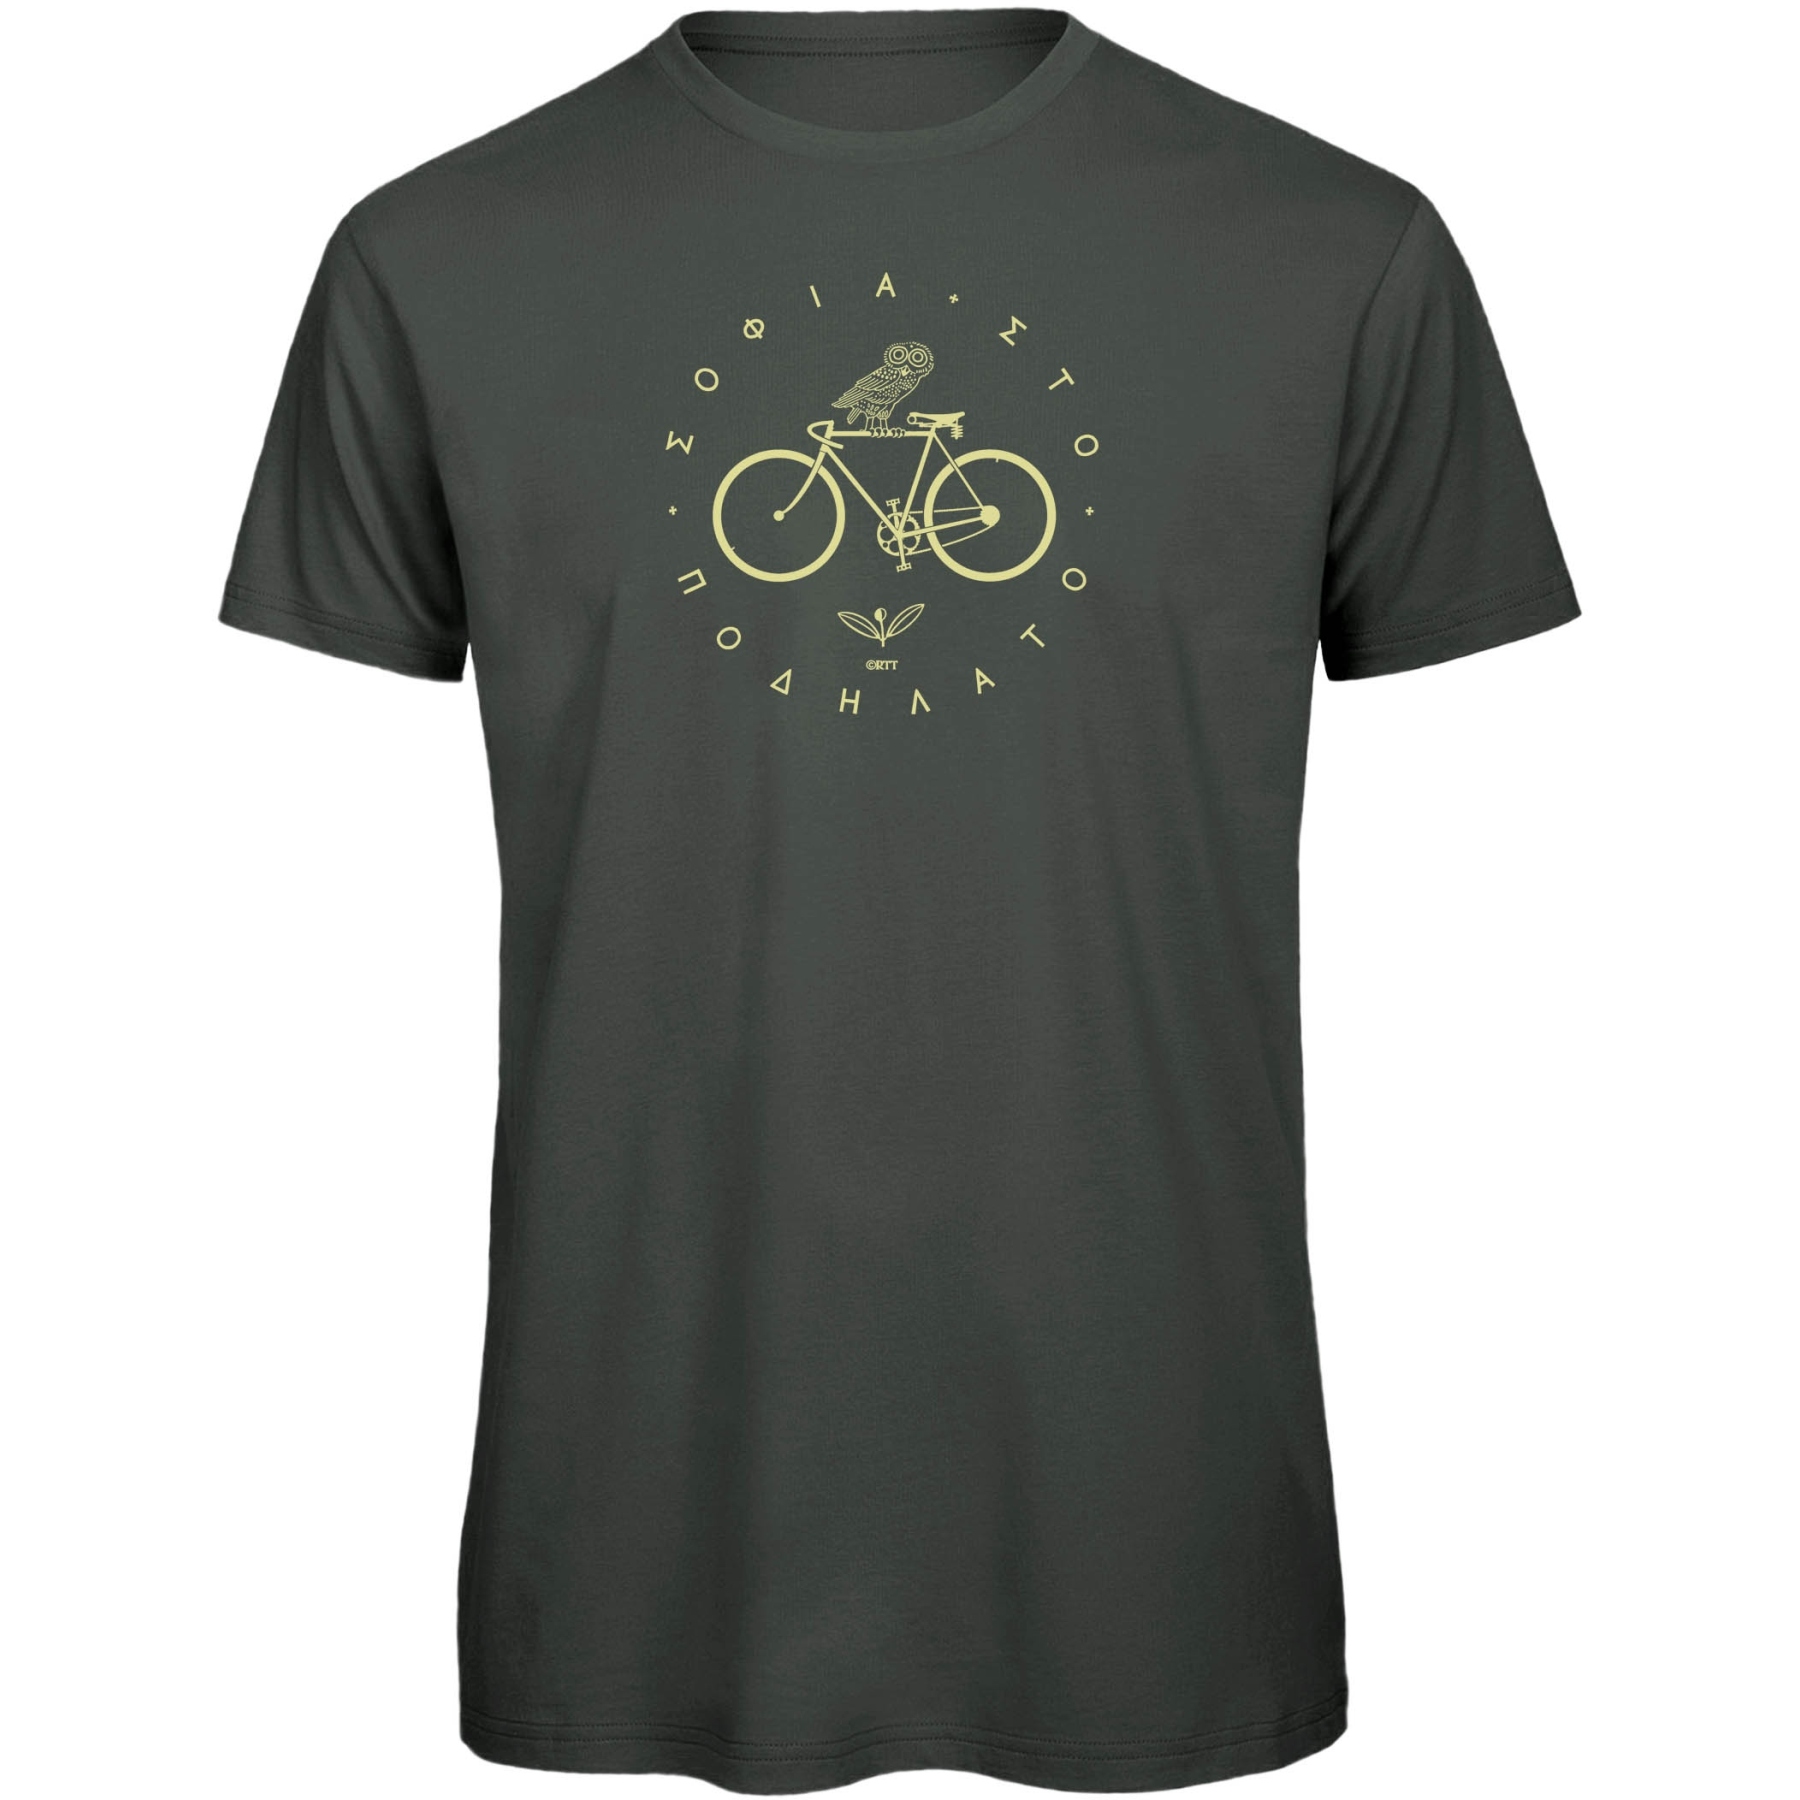 Foto de RTTshirts Camiseta Bicicleta - Minerva - gris oscuro